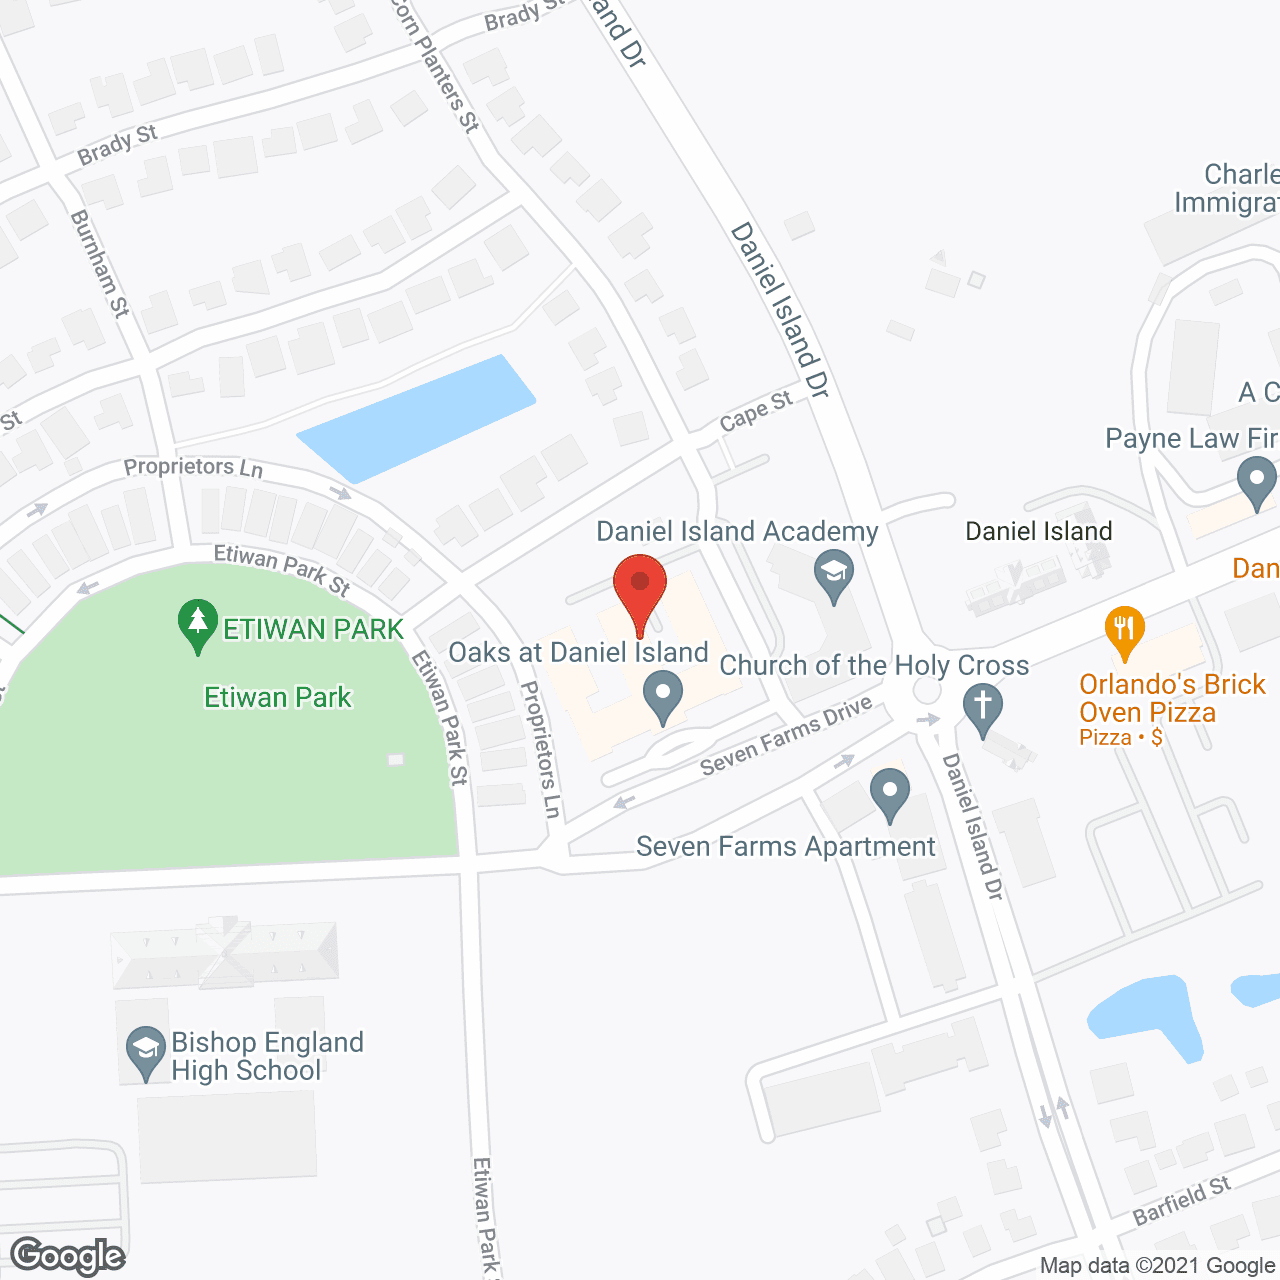 Oaks at Daniel Island in google map